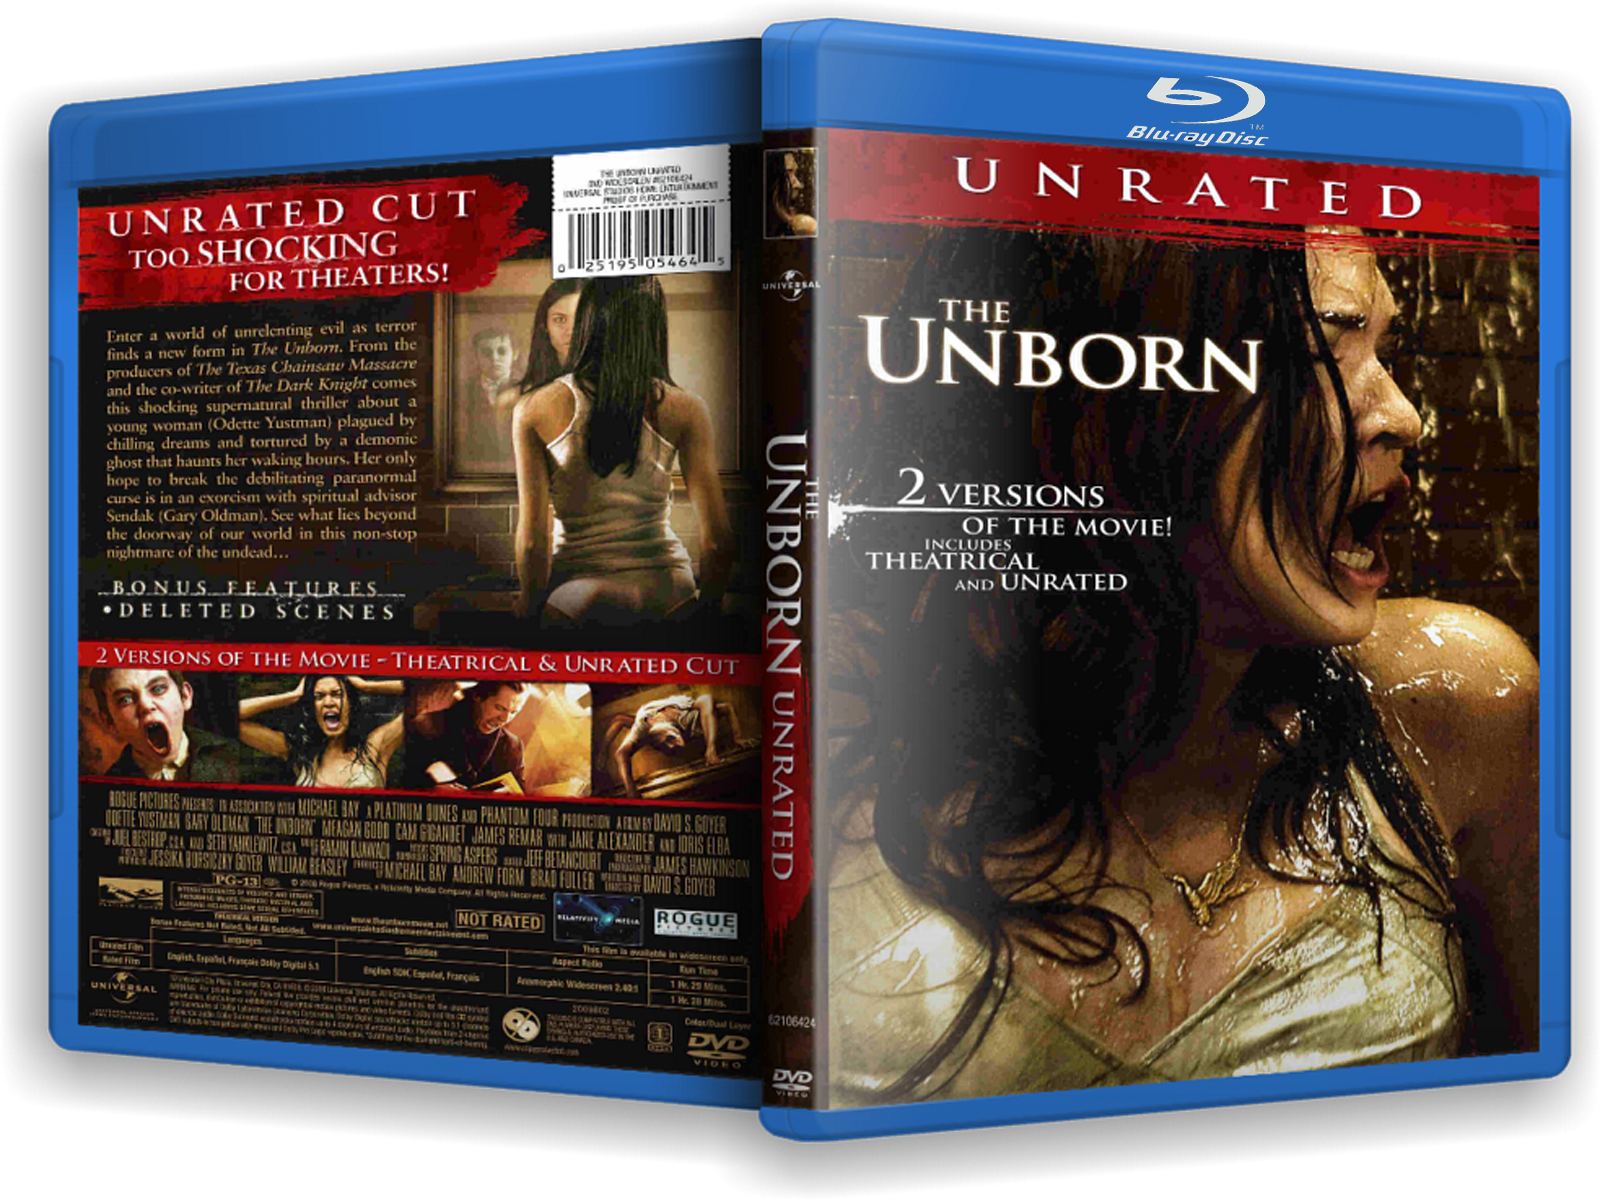 The Unborn (2009) Hindi Dubbed